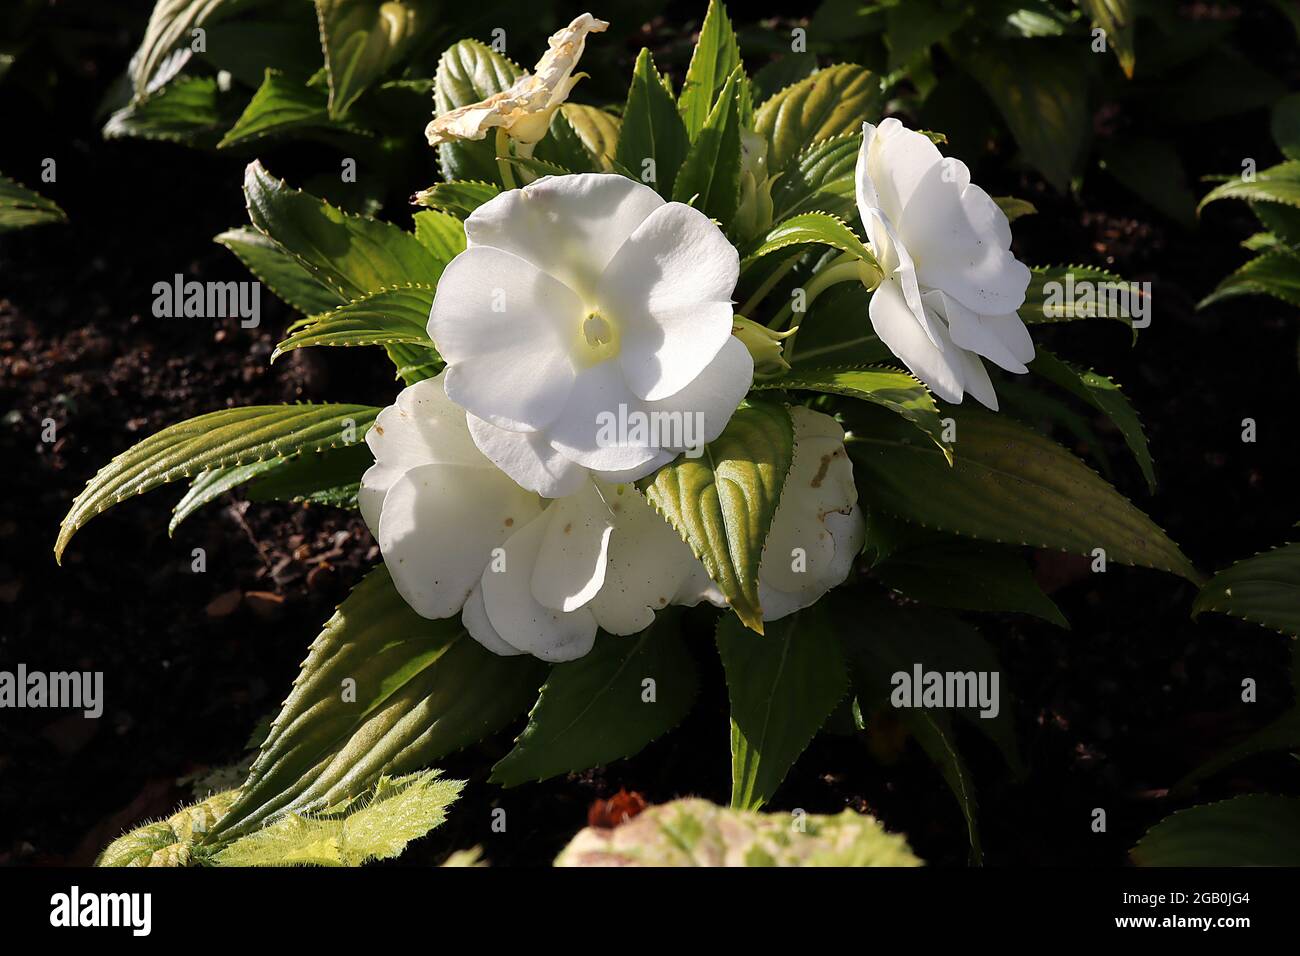 Impatiens hawkerii ‘Super Sonic White’ New Guinea Impatiens White - flat semi-double white flowers and dark green seghated leaves, June, England, UK Foto Stock